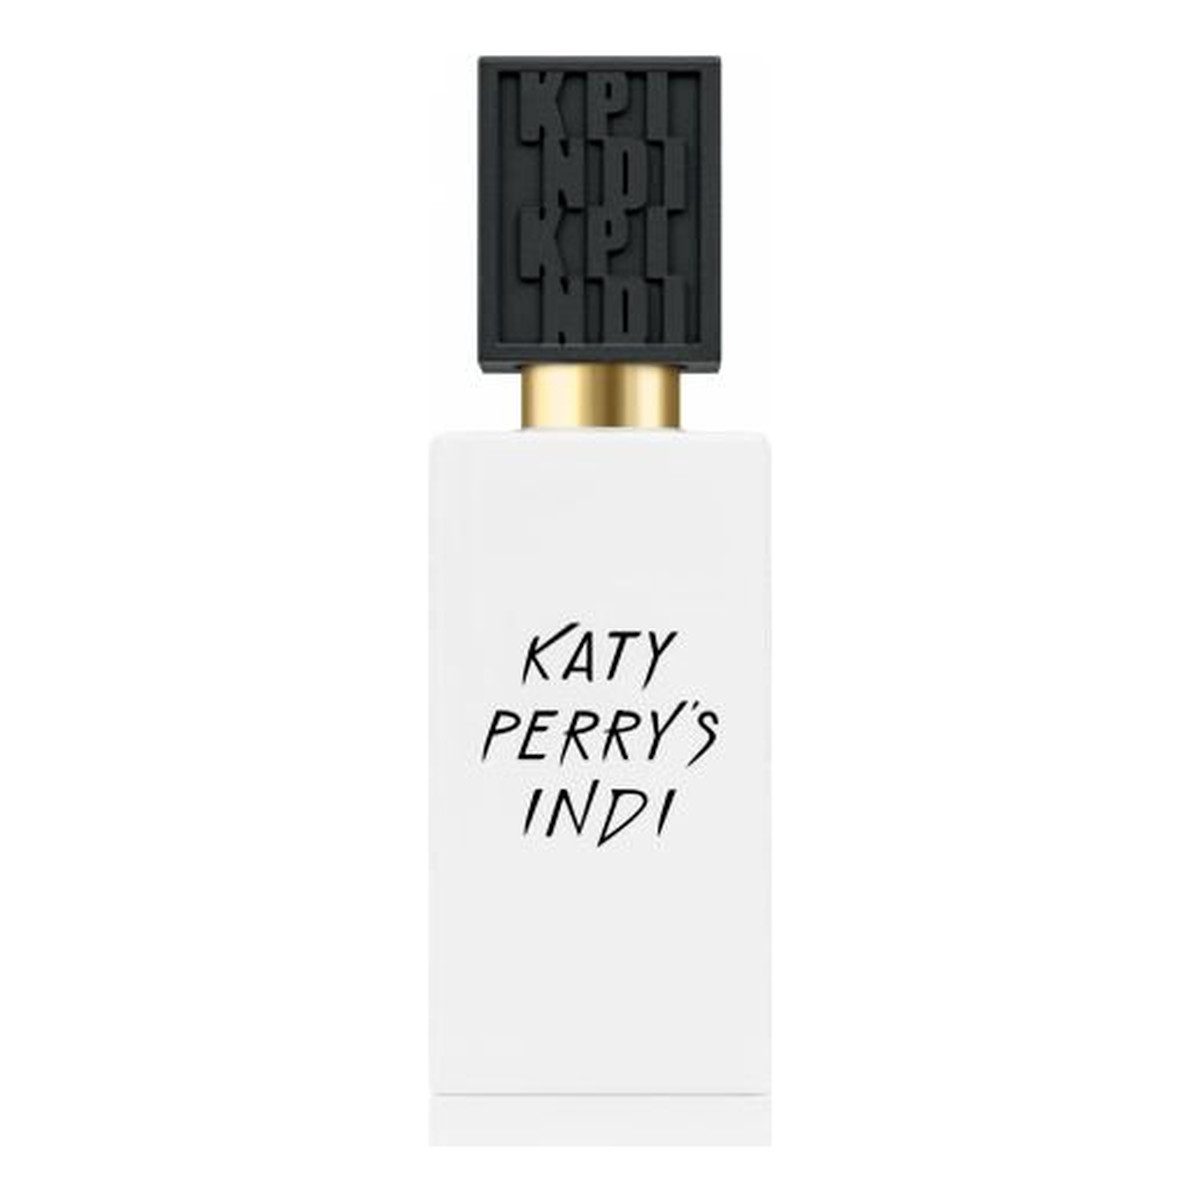 Katy Perry 's Indi Woda perfumowana 30ml